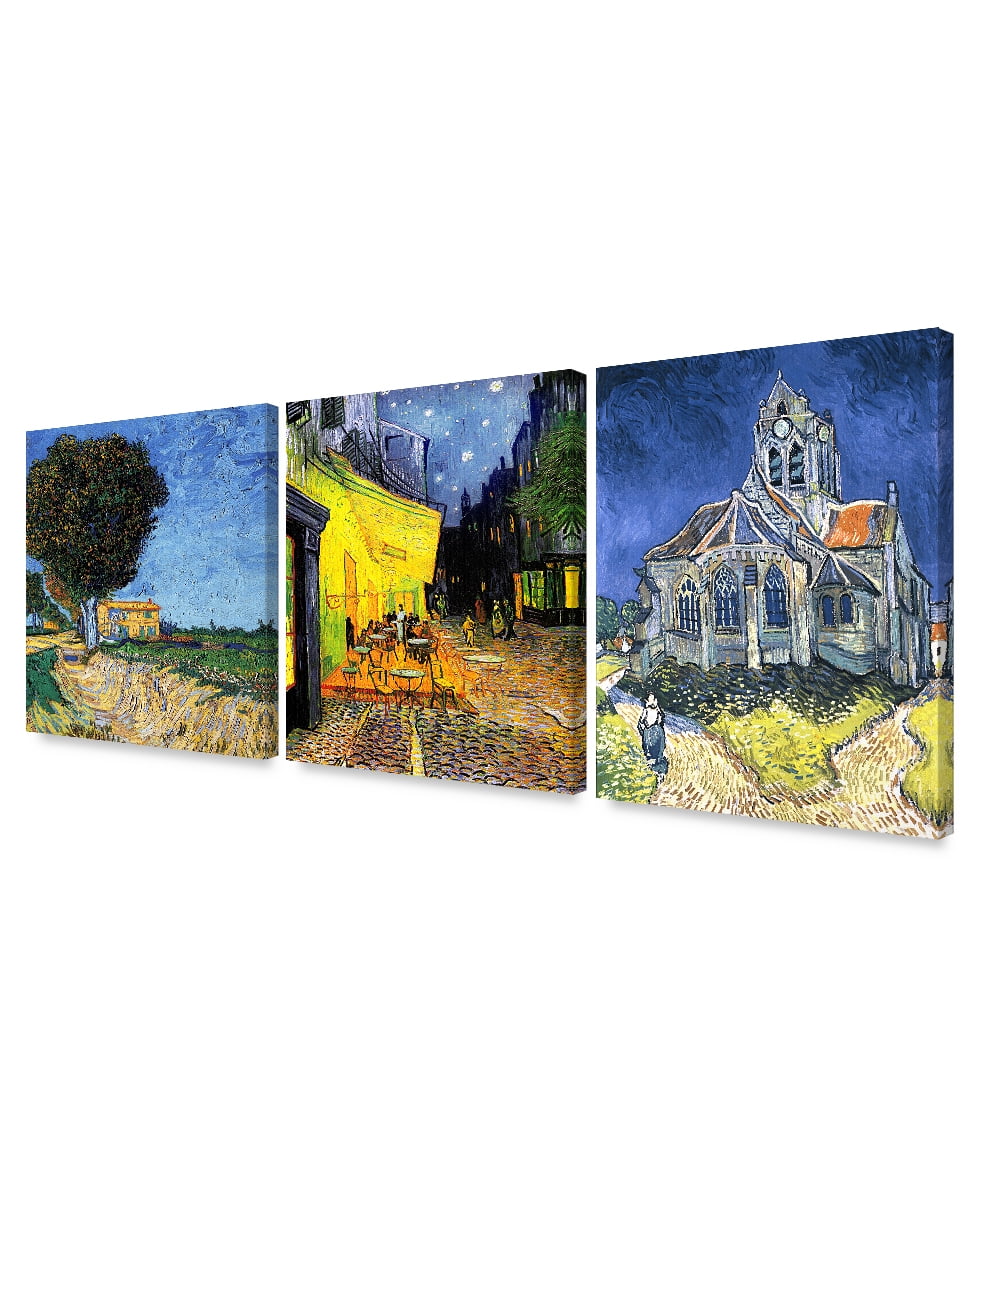 DECORARTS Triptych (Van Gogh Famous Art Series) Vincent Classic Art  Reproduction. Giclee Canvas Prints Wall Art for Home Decor 30x24